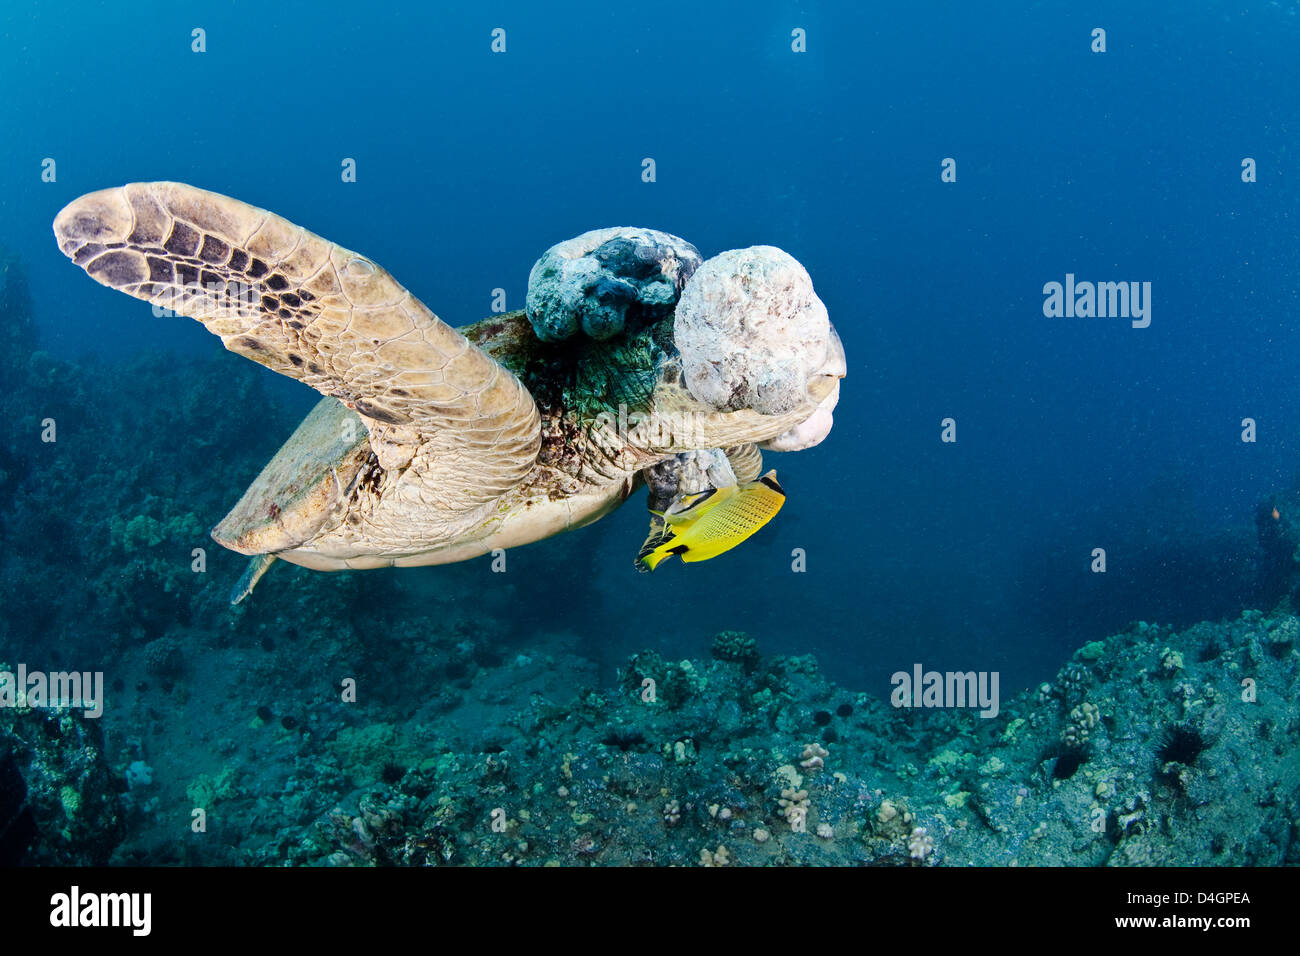 This green sea turtle, Chelonia mydas, has large fibropapilloma tumors covering it’s head and eyes. Hawaii. Stock Photo